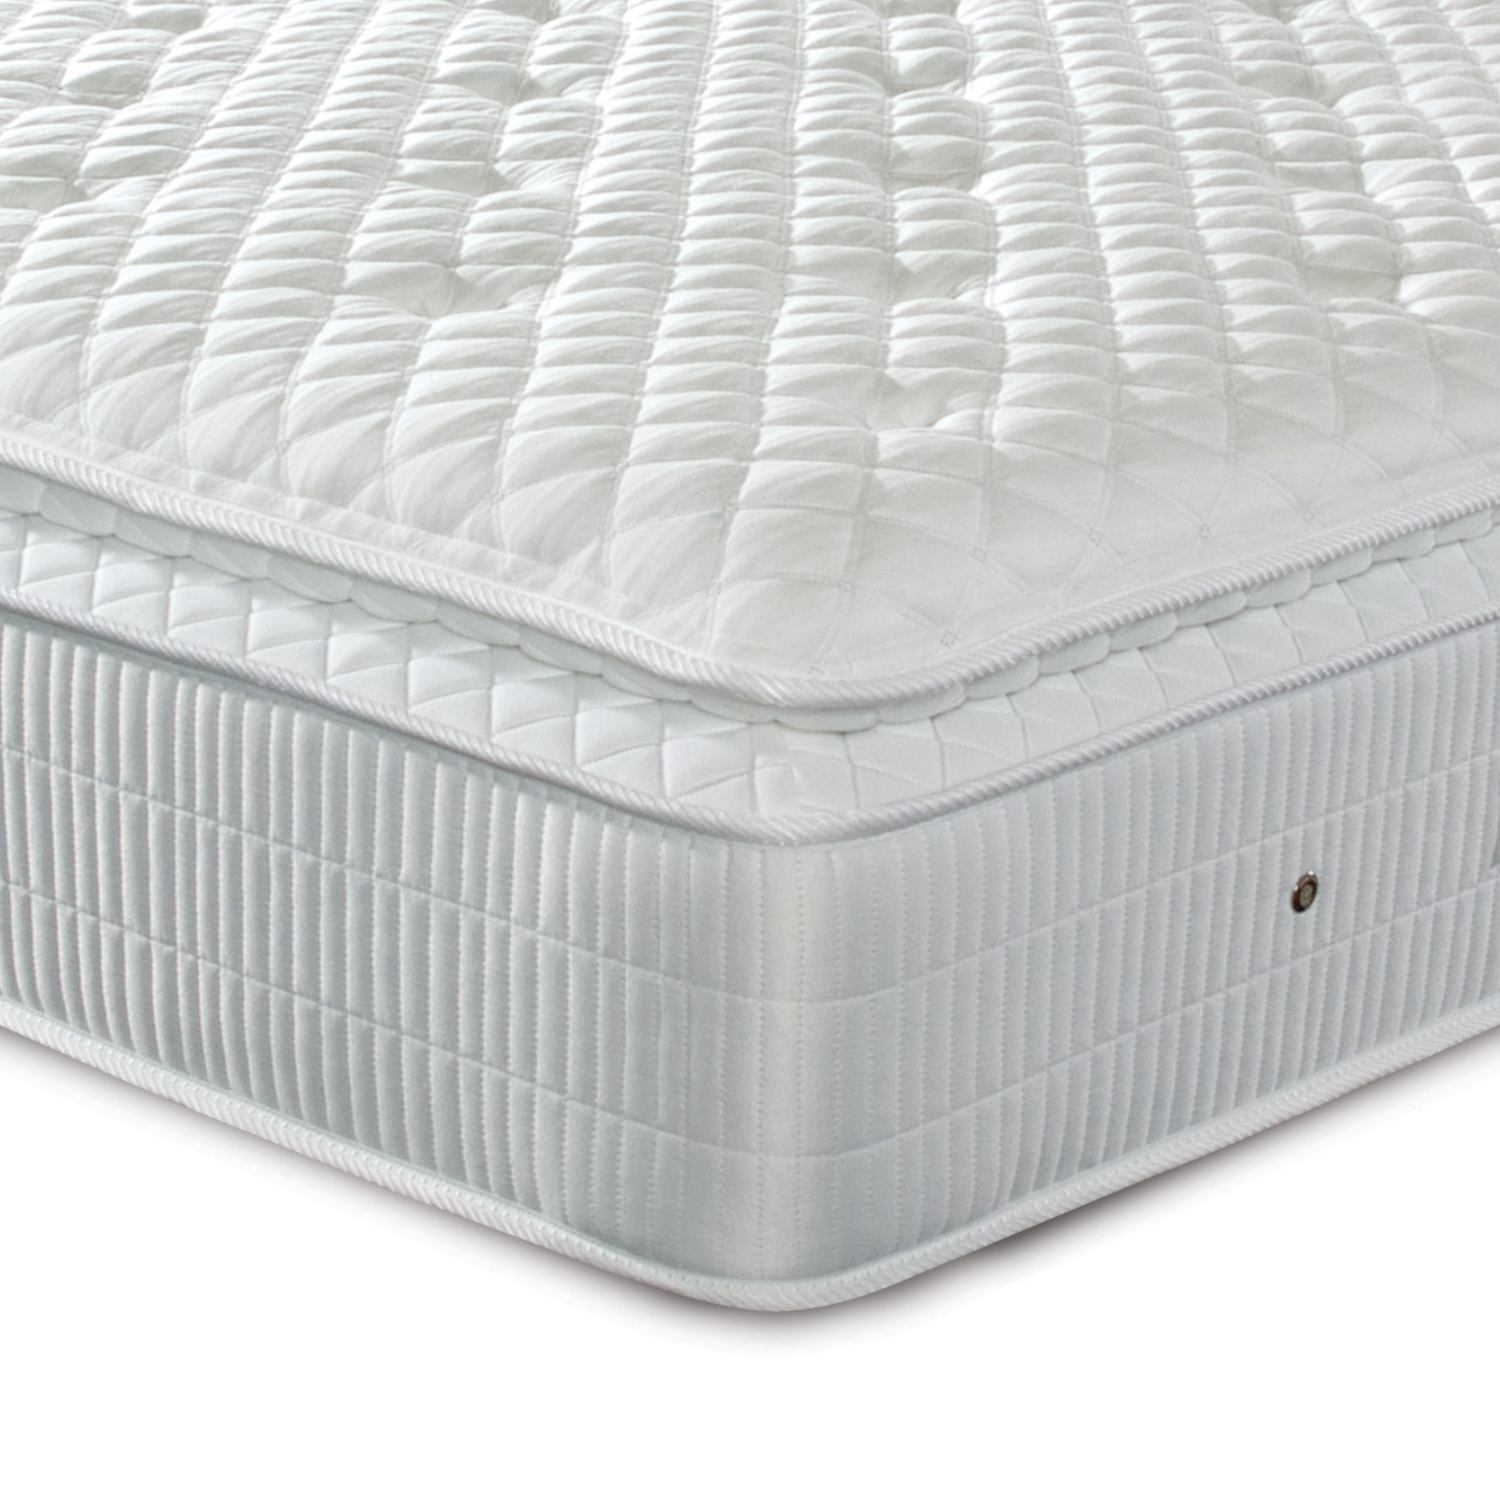 Photo of Sleepeezee cooler pinnacle 1800 pocket sprung mattress with gel top - double